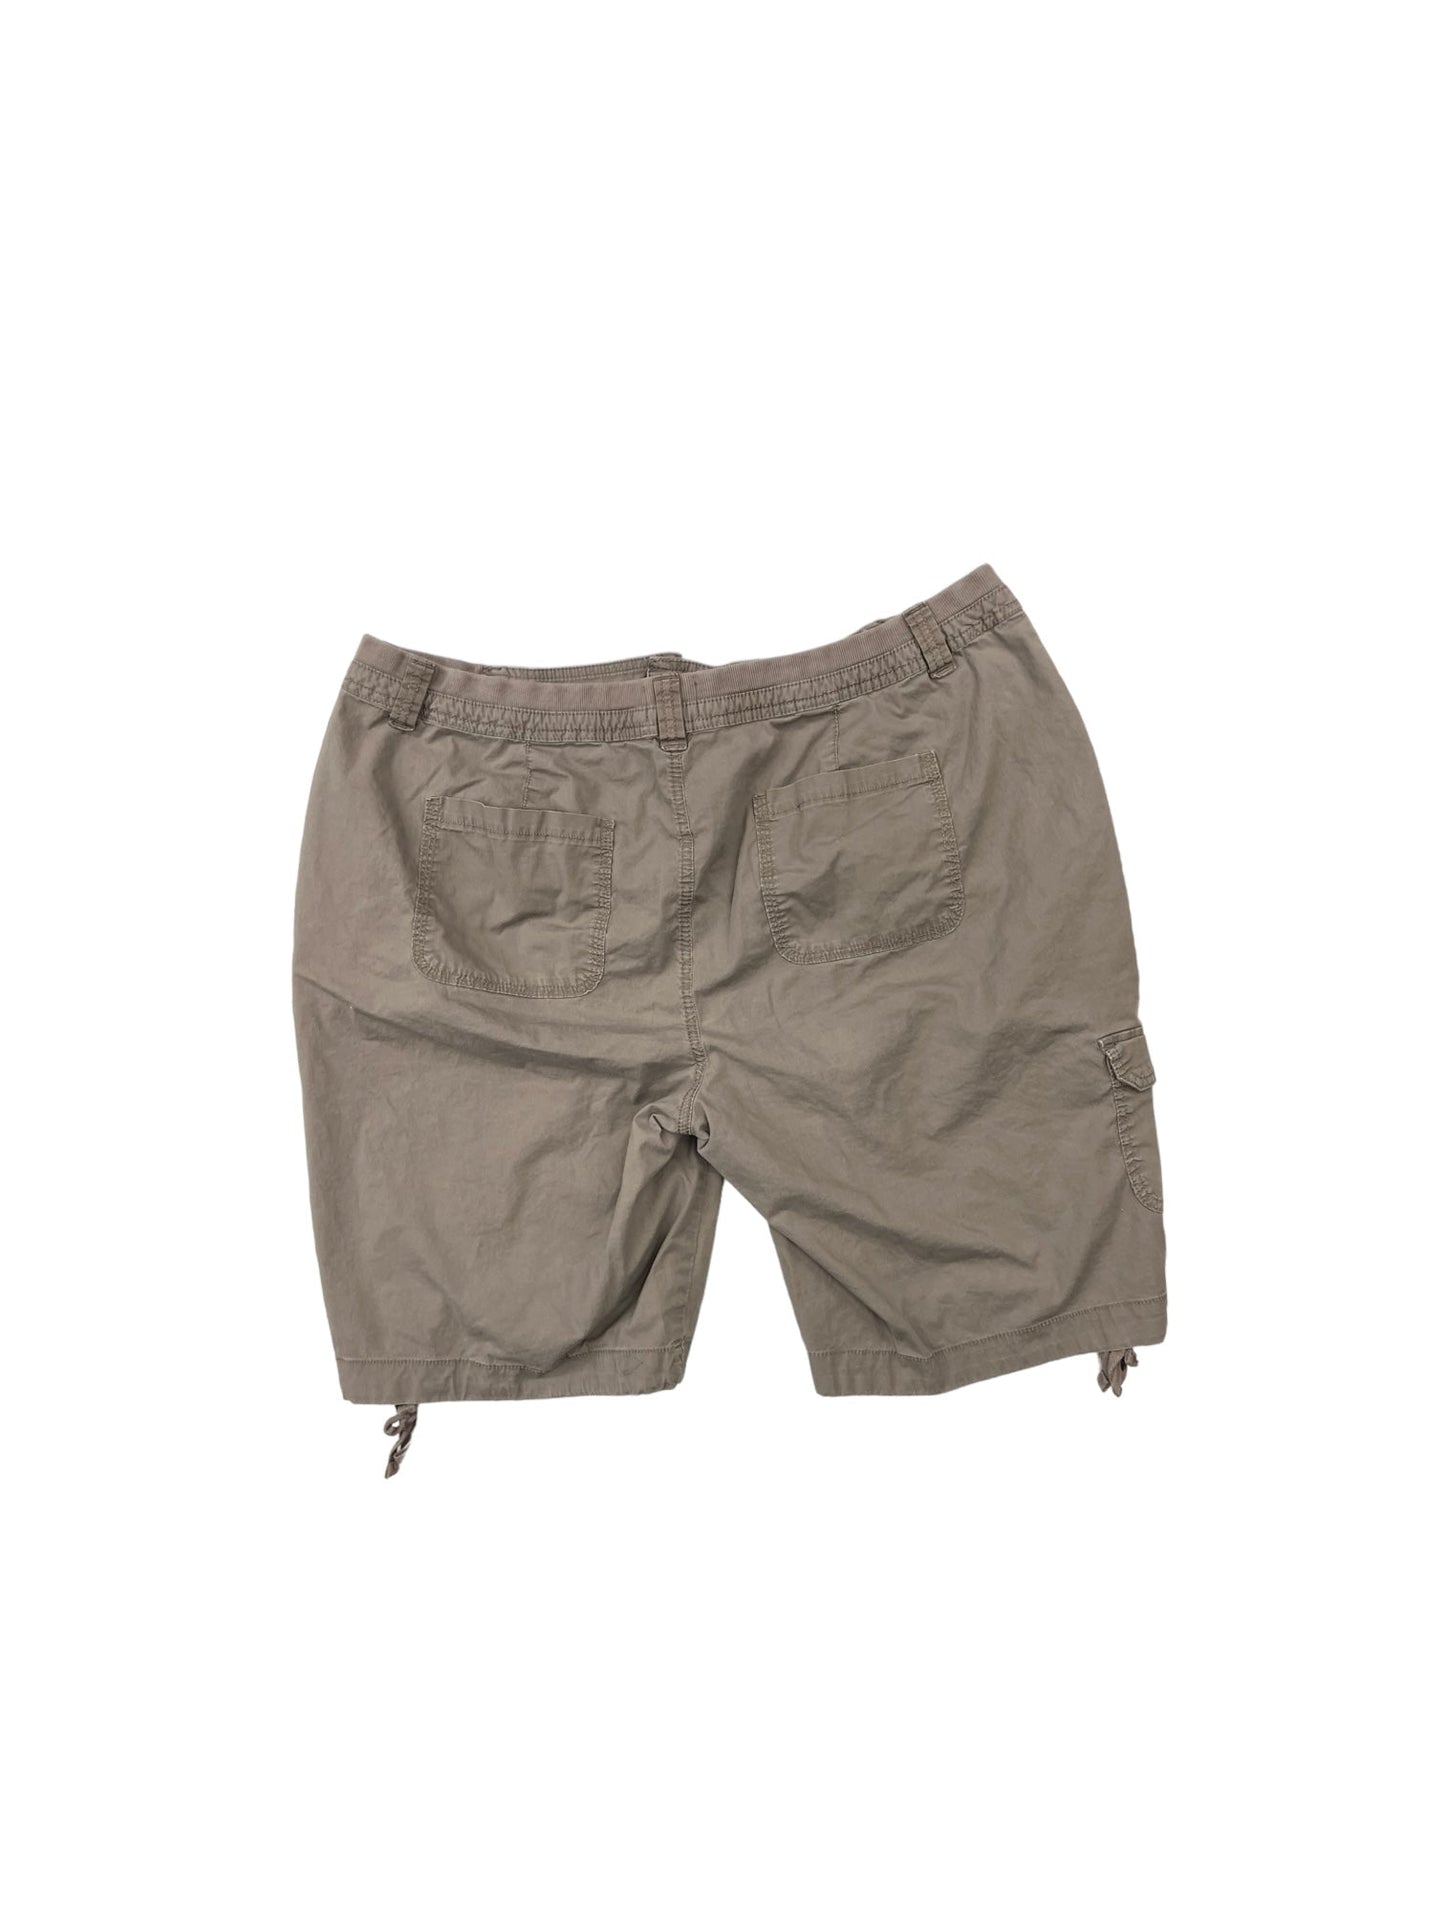 Shorts By St Johns Bay  Size: 20w